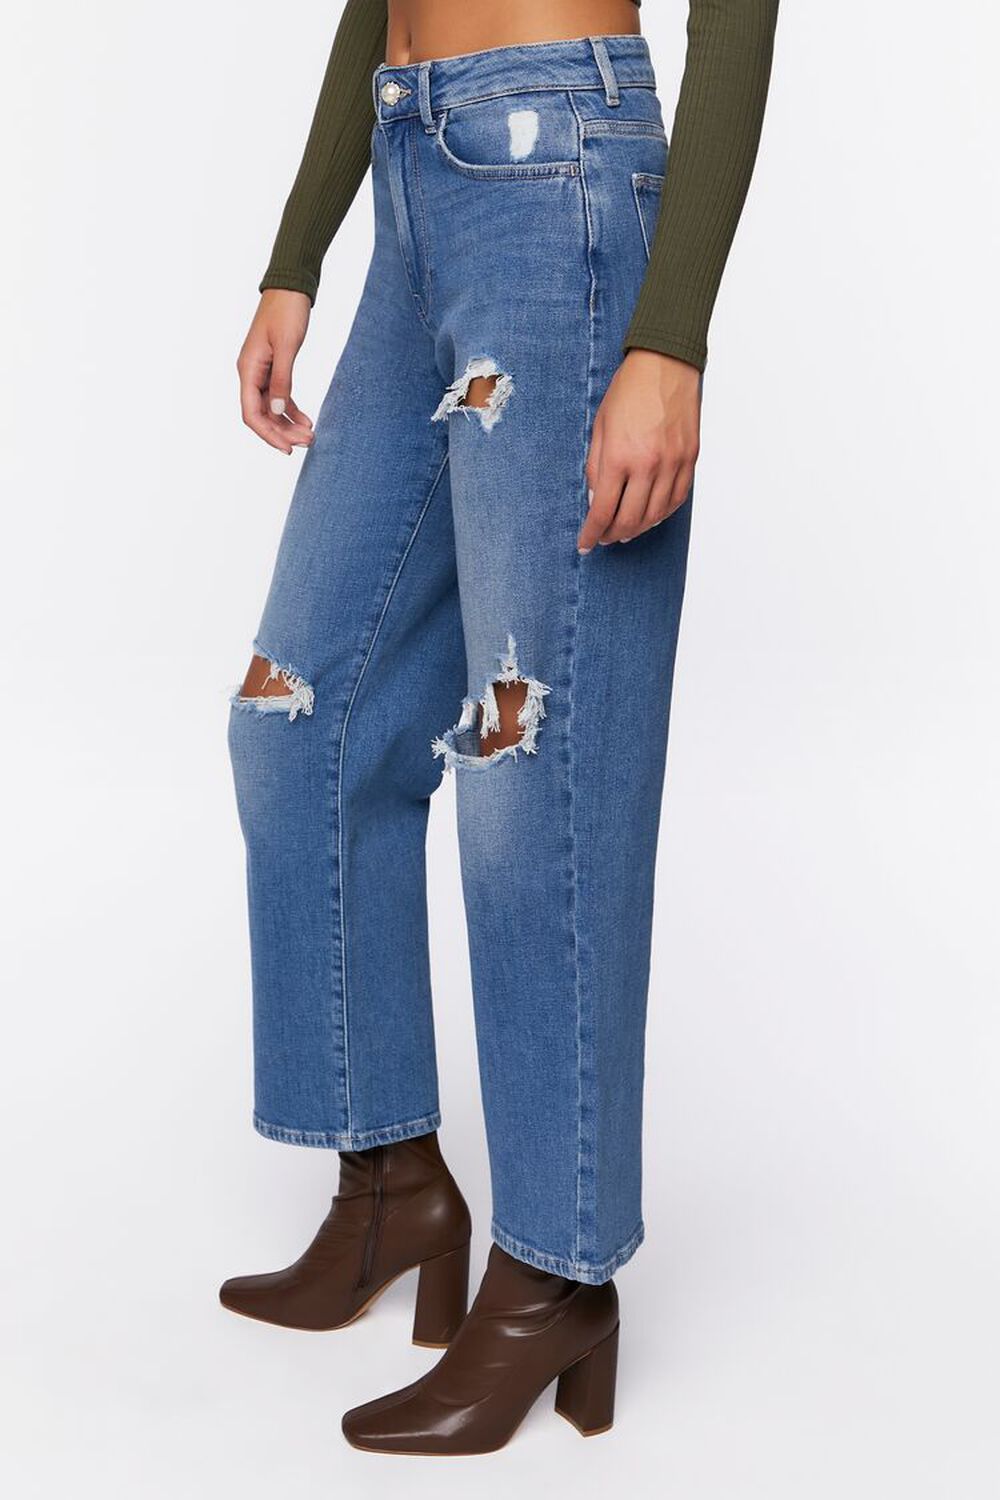 MEDIUM DENIM Hemp 10% 90s-Fit Jeans, image 2